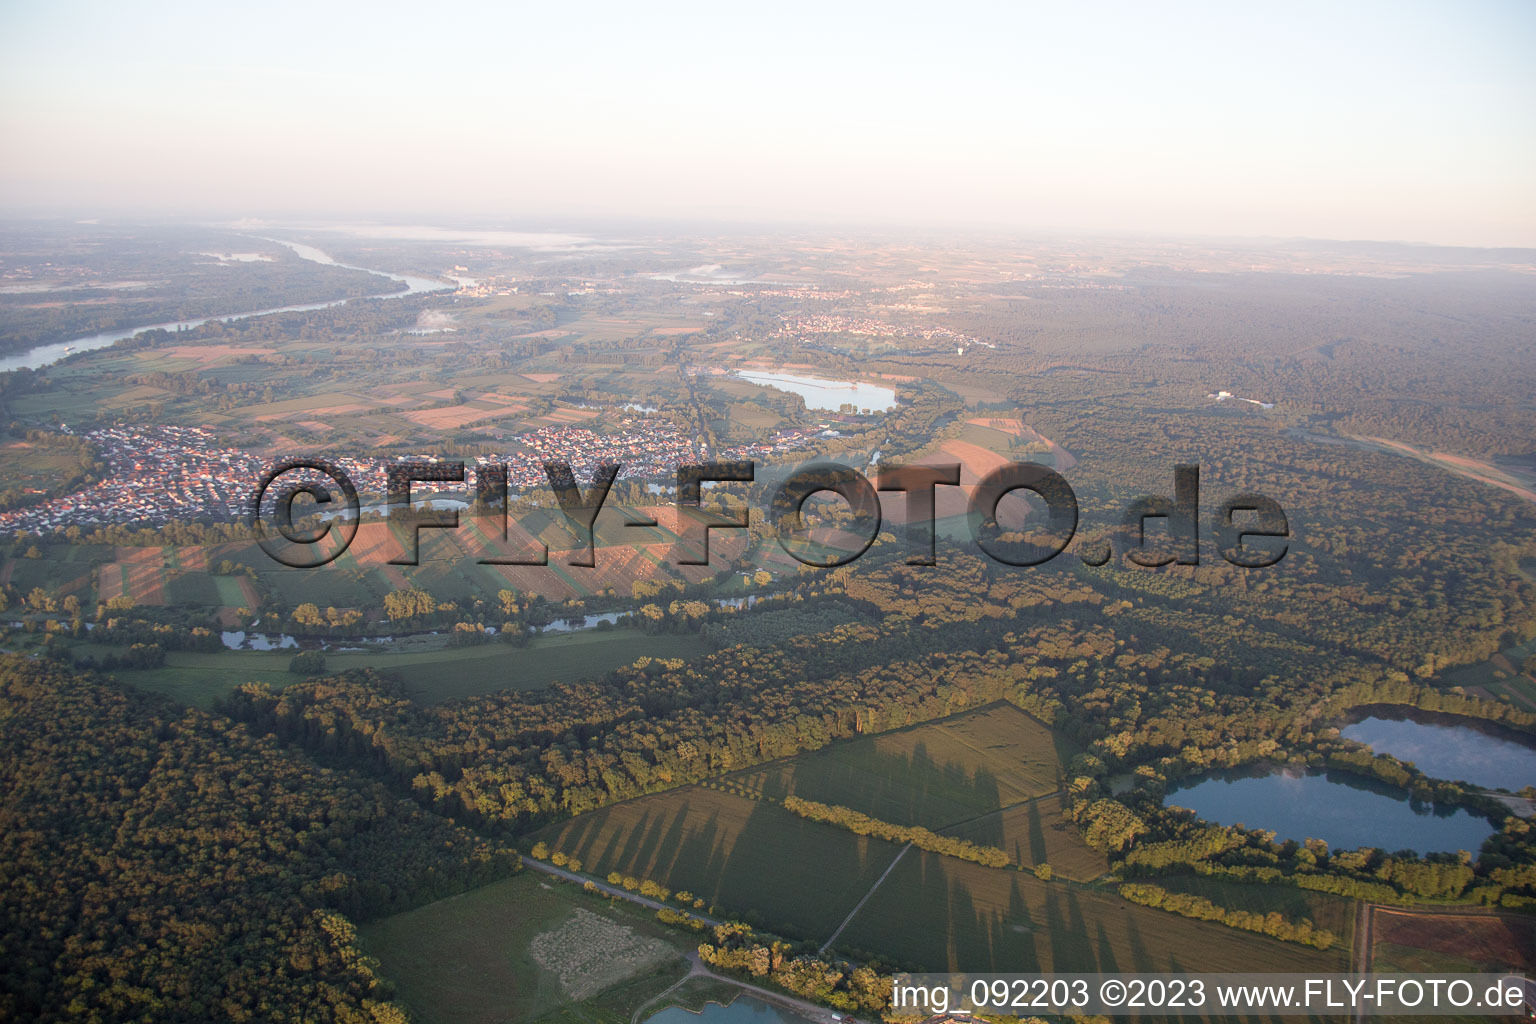 Neuburg in the state Rhineland-Palatinate, Germany from the plane